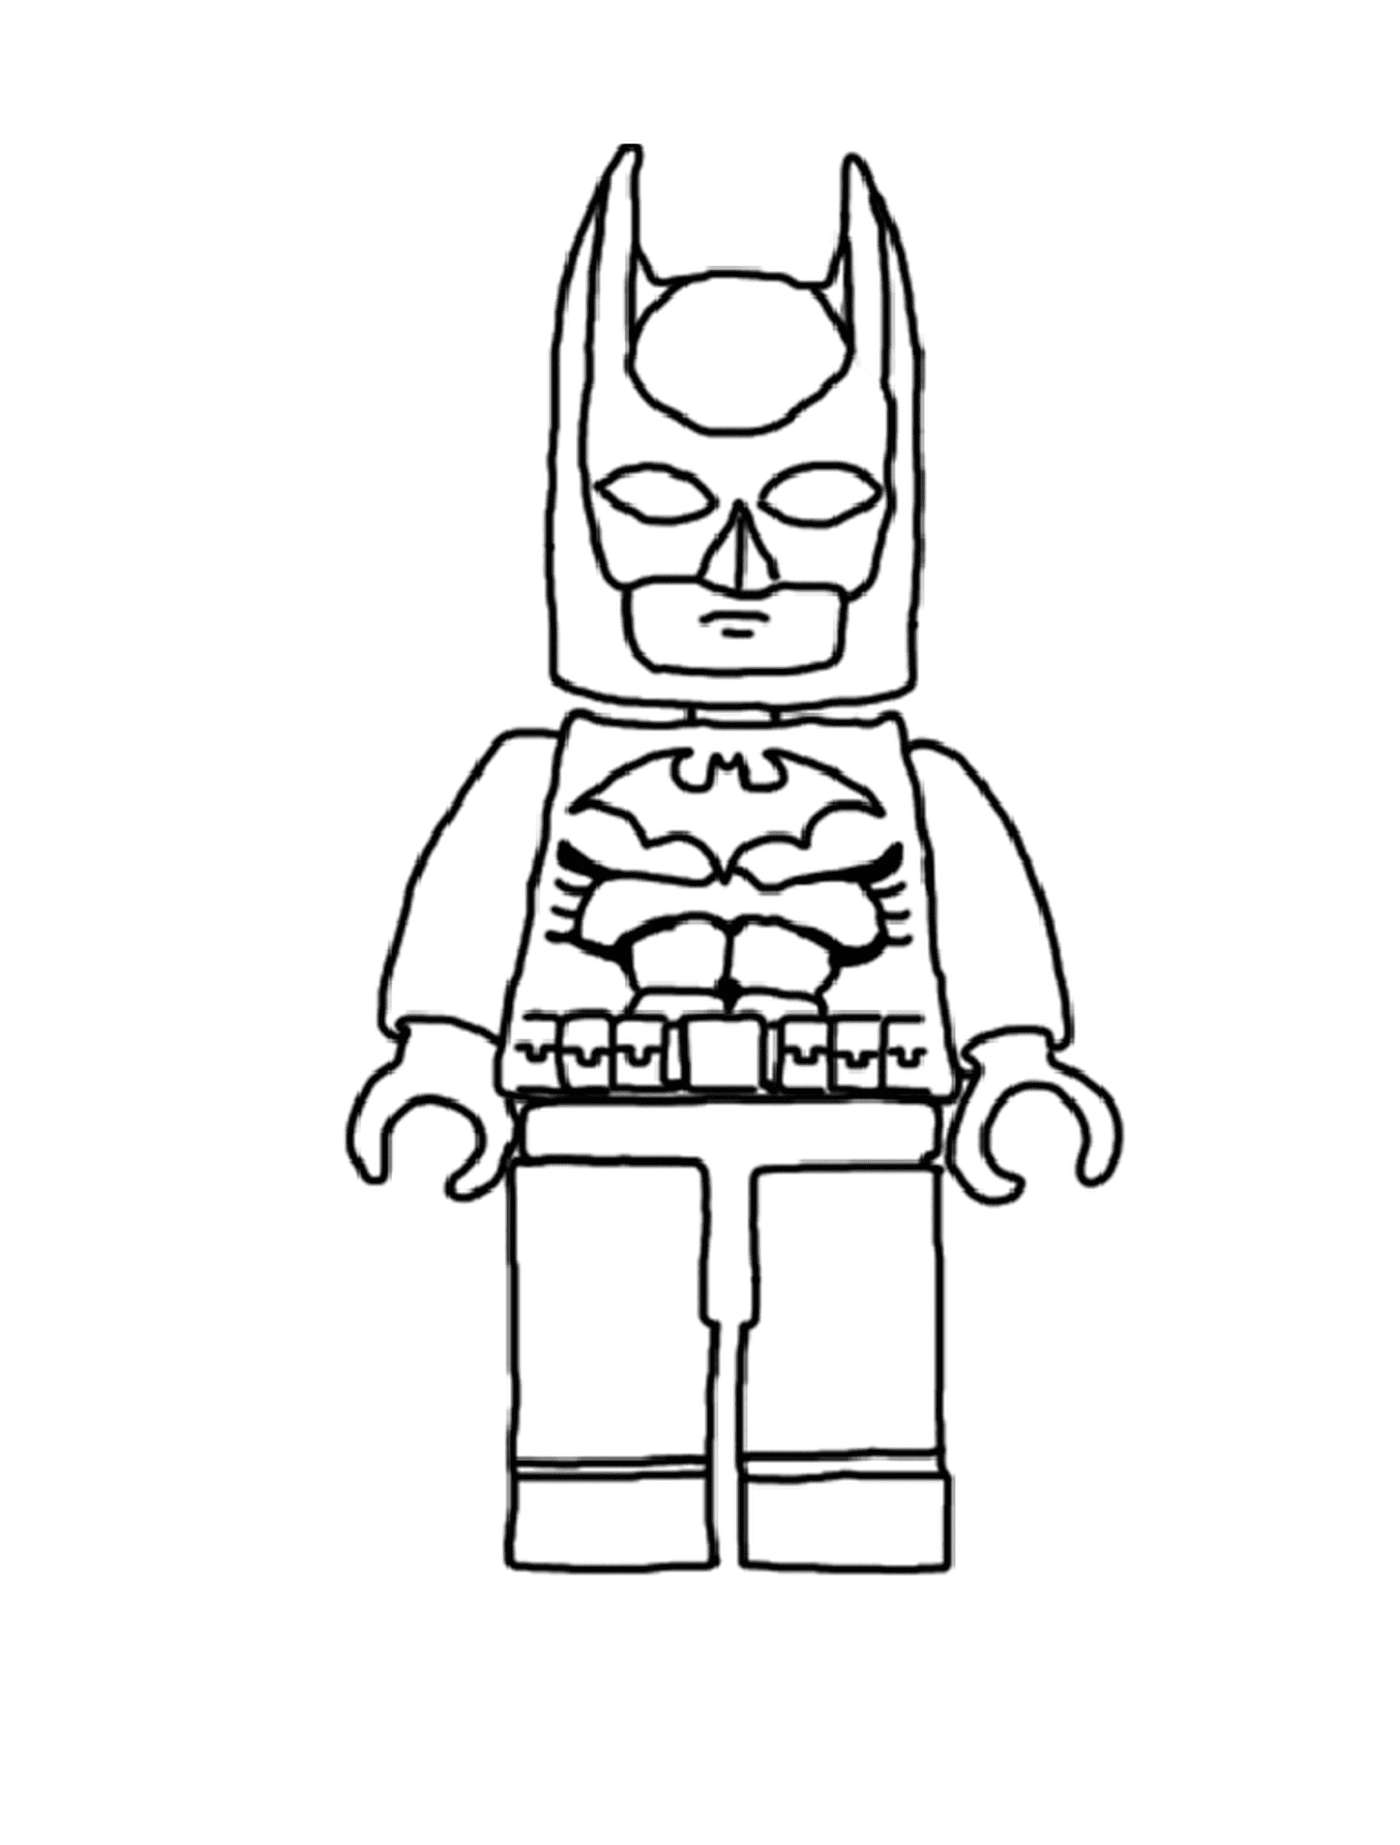  Batman Lego semplice dal film 2017 